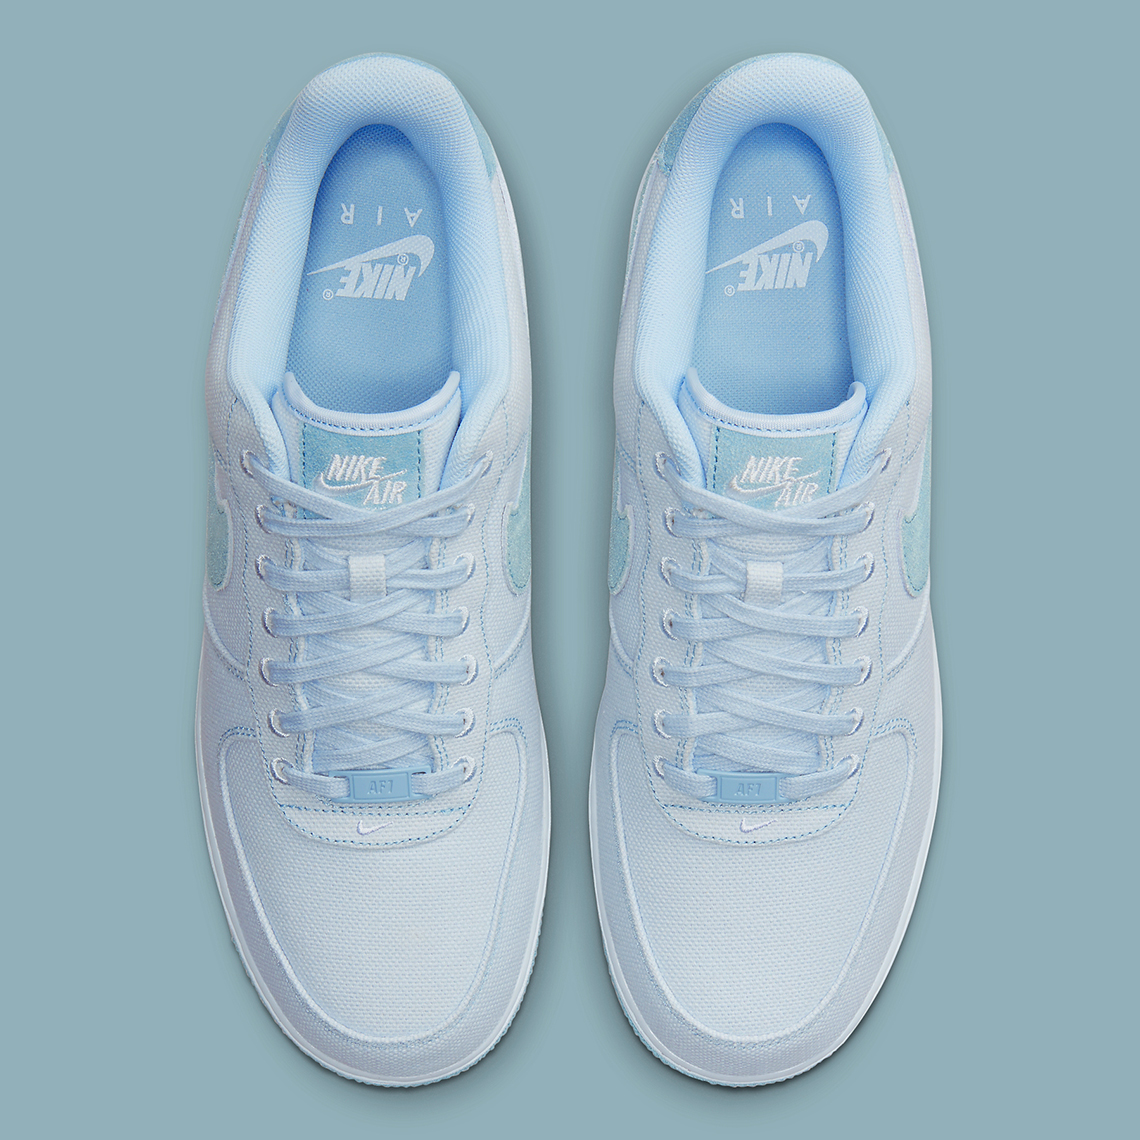 Nike nike free run white mint Low Blue Dip Dye Release Date 4